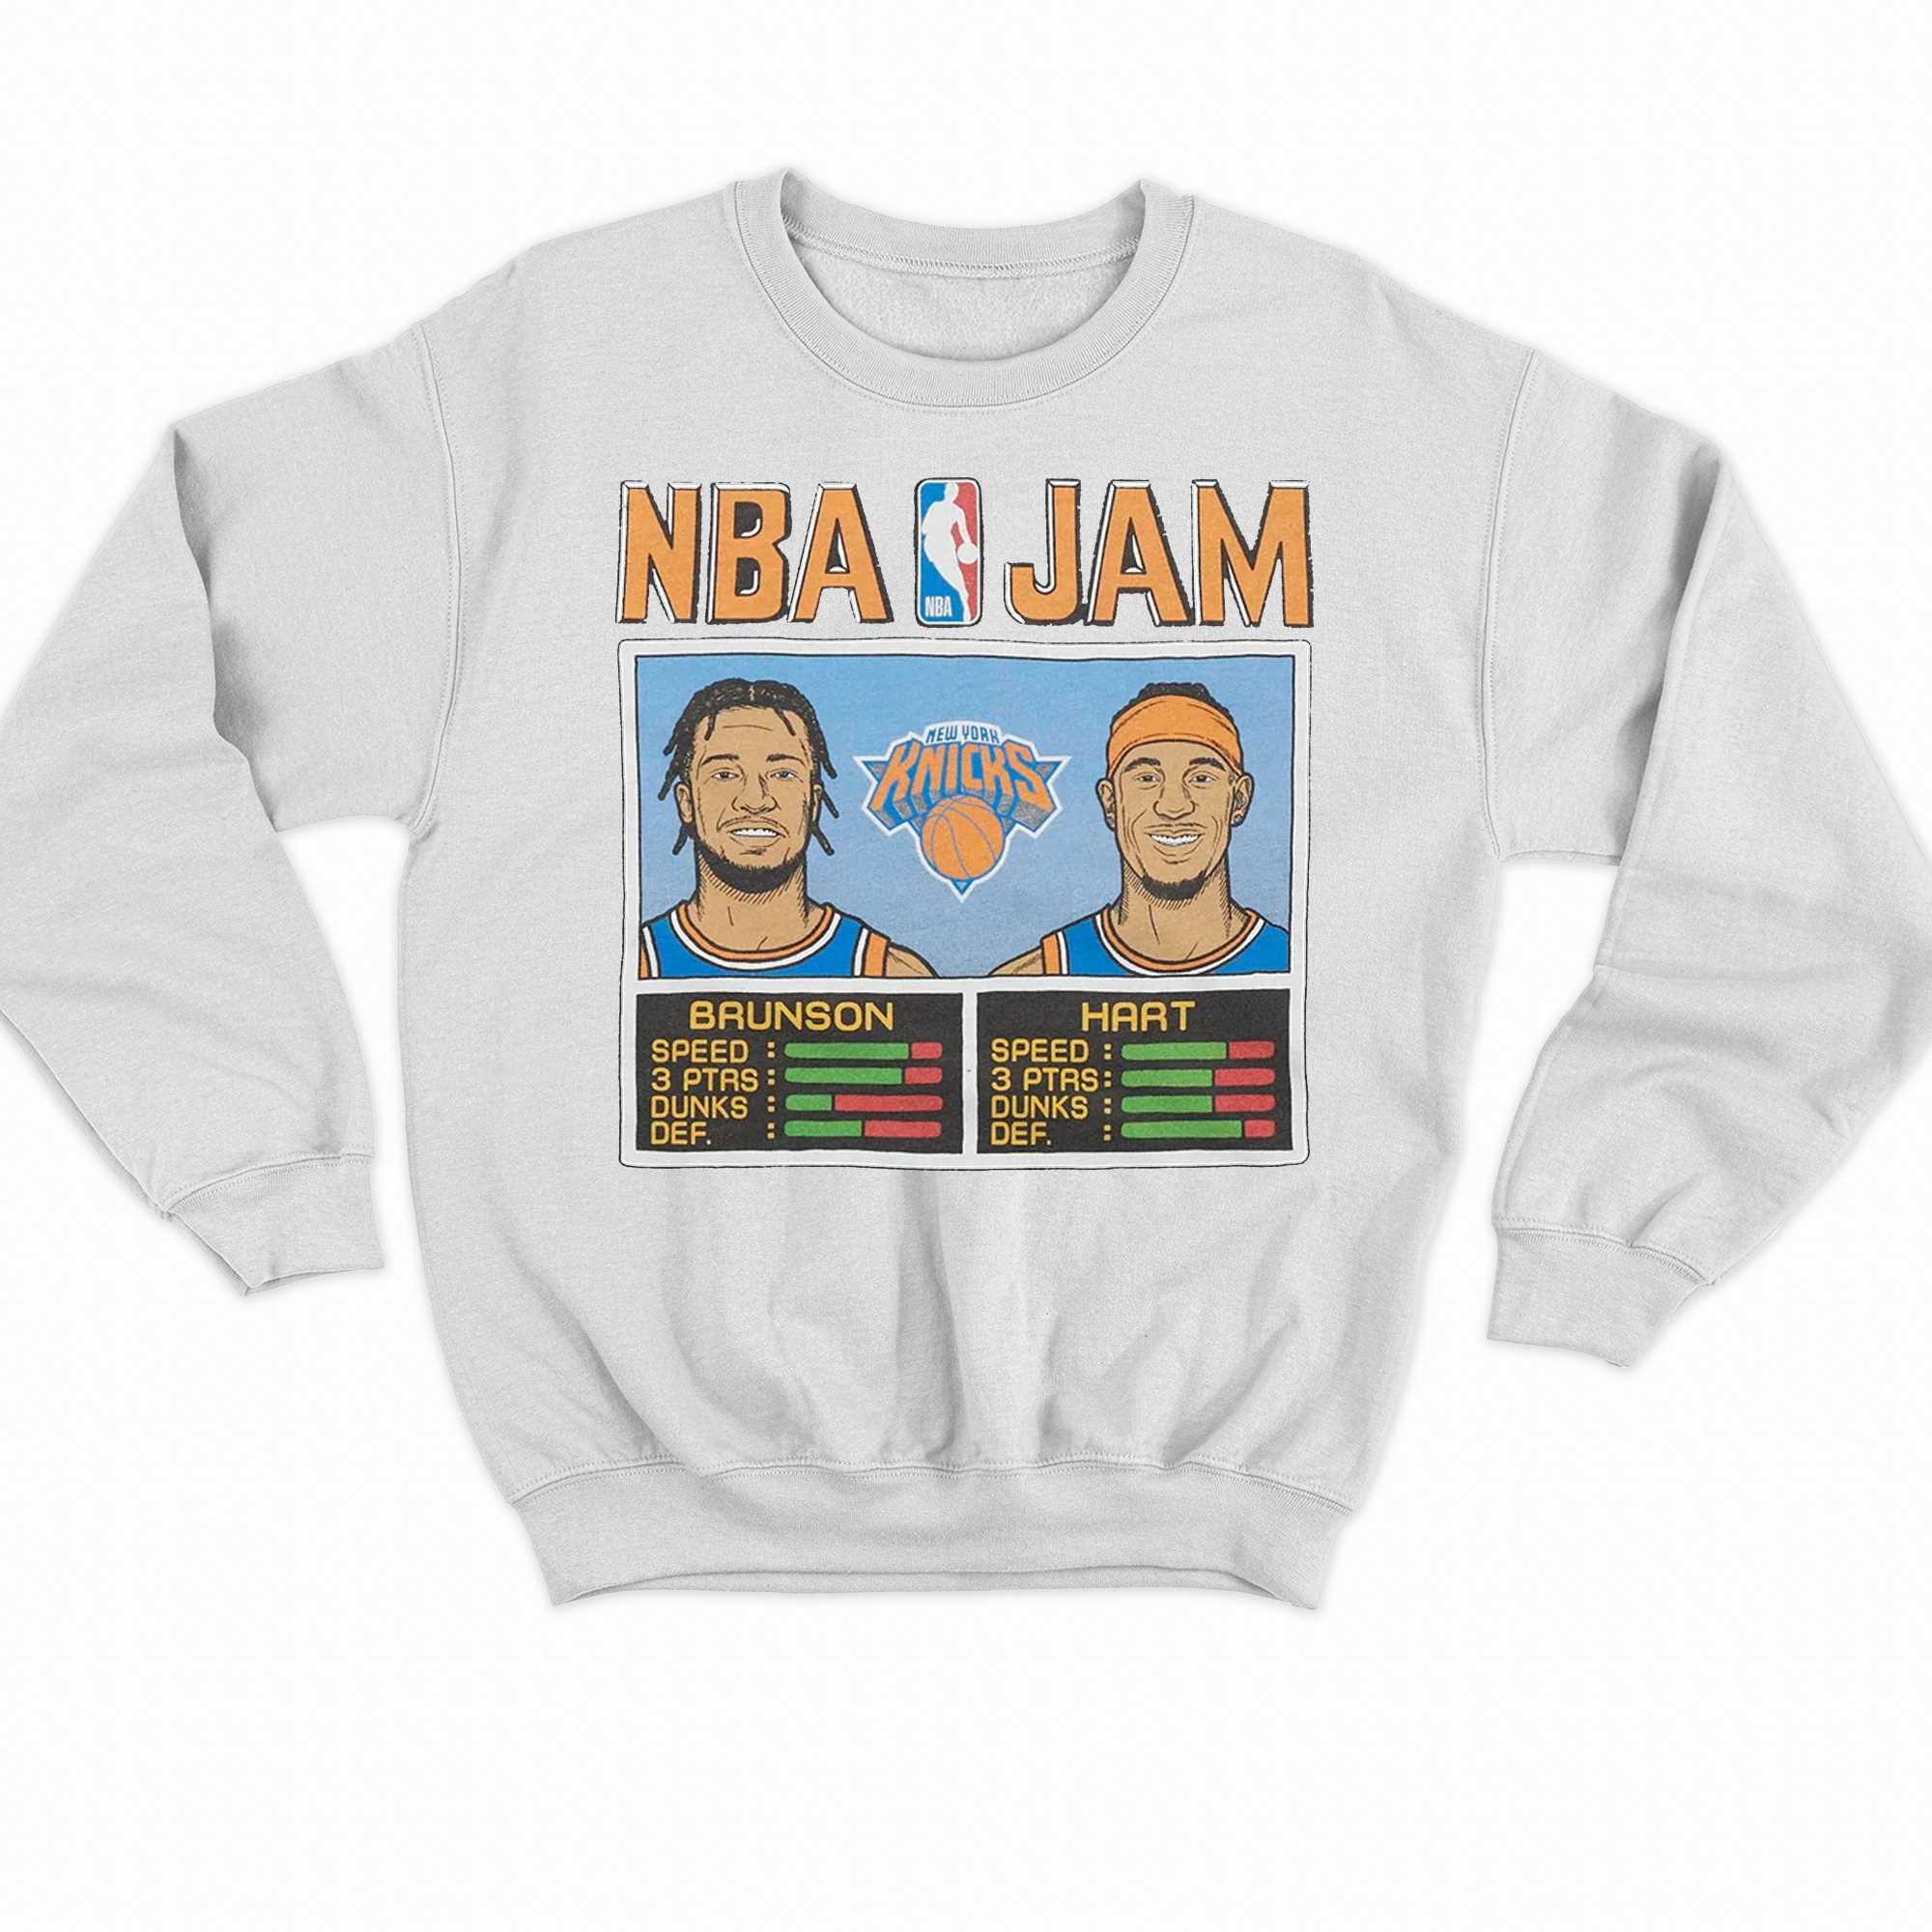 Nba Jam Knicks Brunson And Hart Shirt 